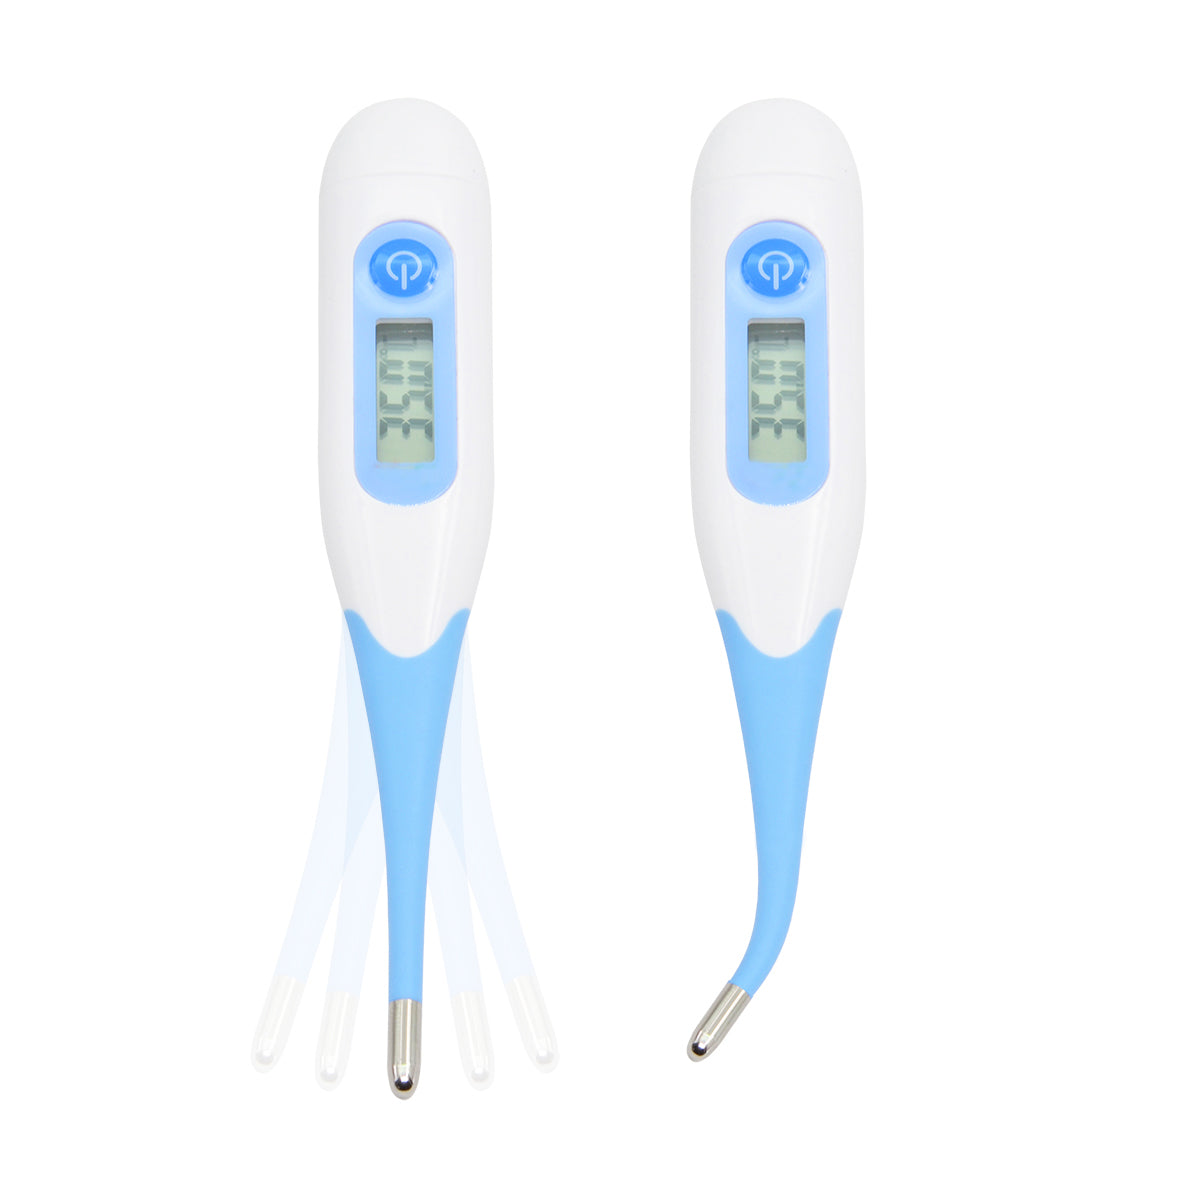 Digital Flexible Tip Thermometer-UW-DMT-4132